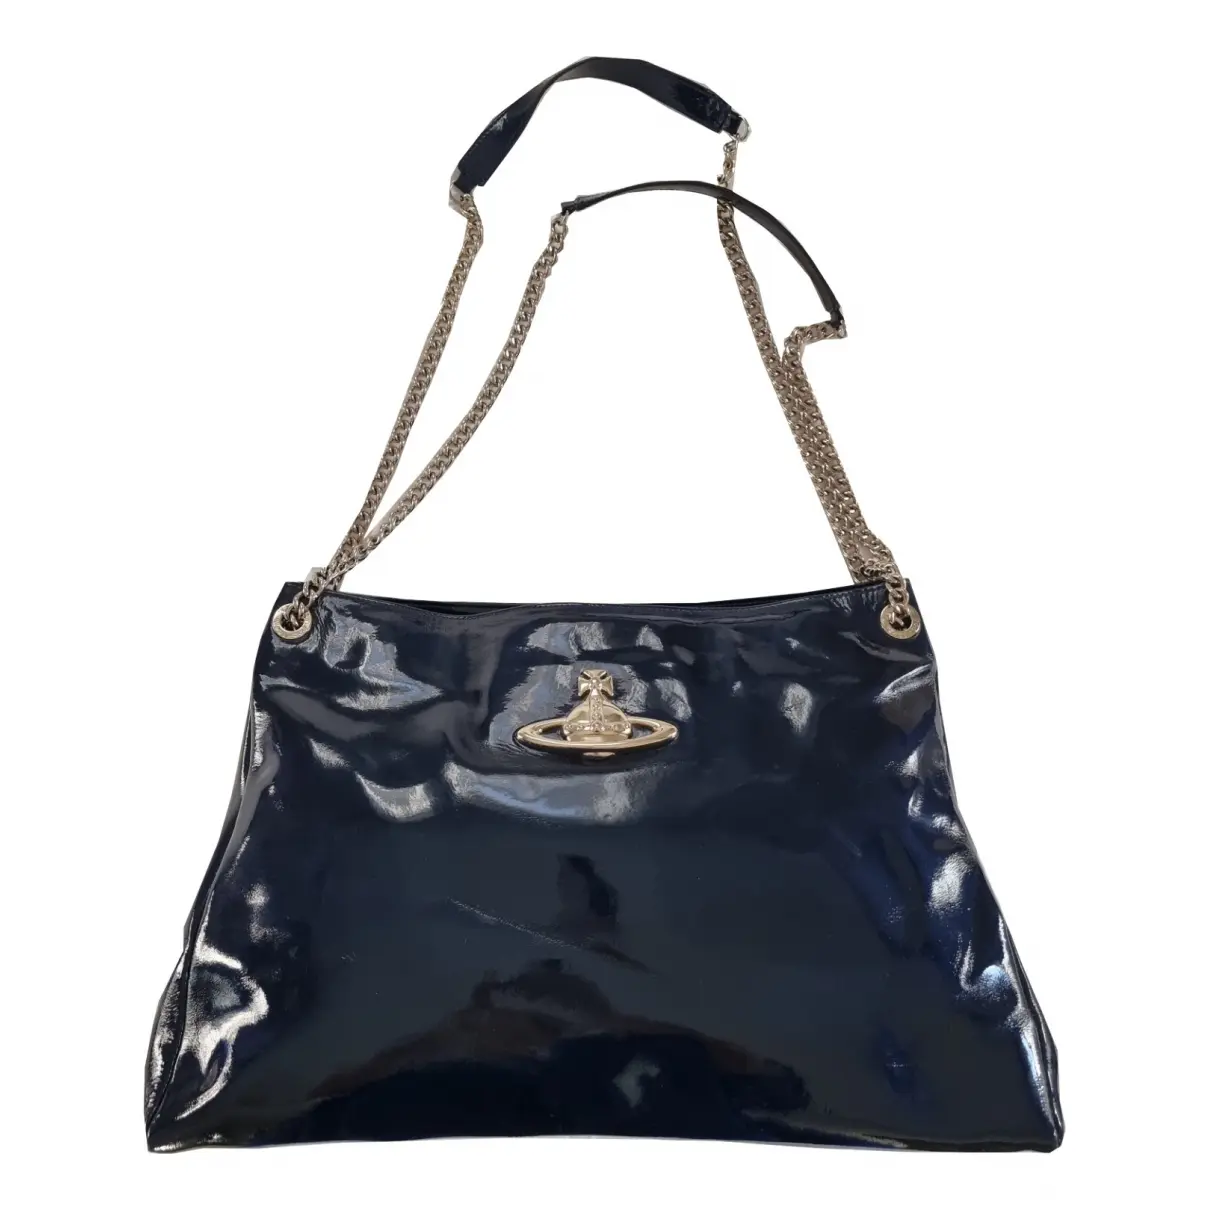 Patent leather handbag Vivienne Westwood Anglomania